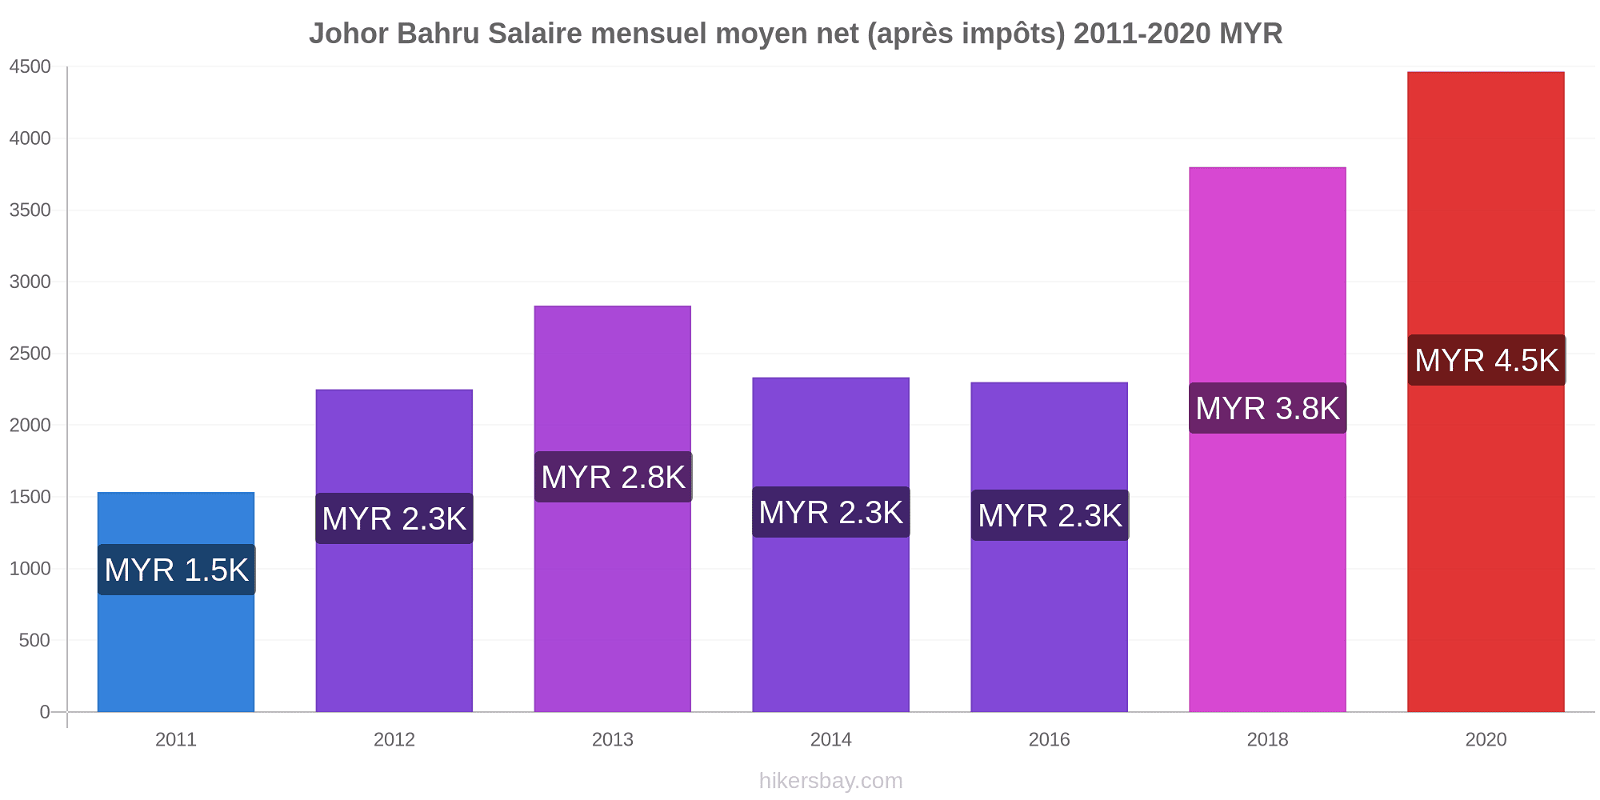 Johor Bahru changements de prix Salaire mensuel Net (après impôts) hikersbay.com